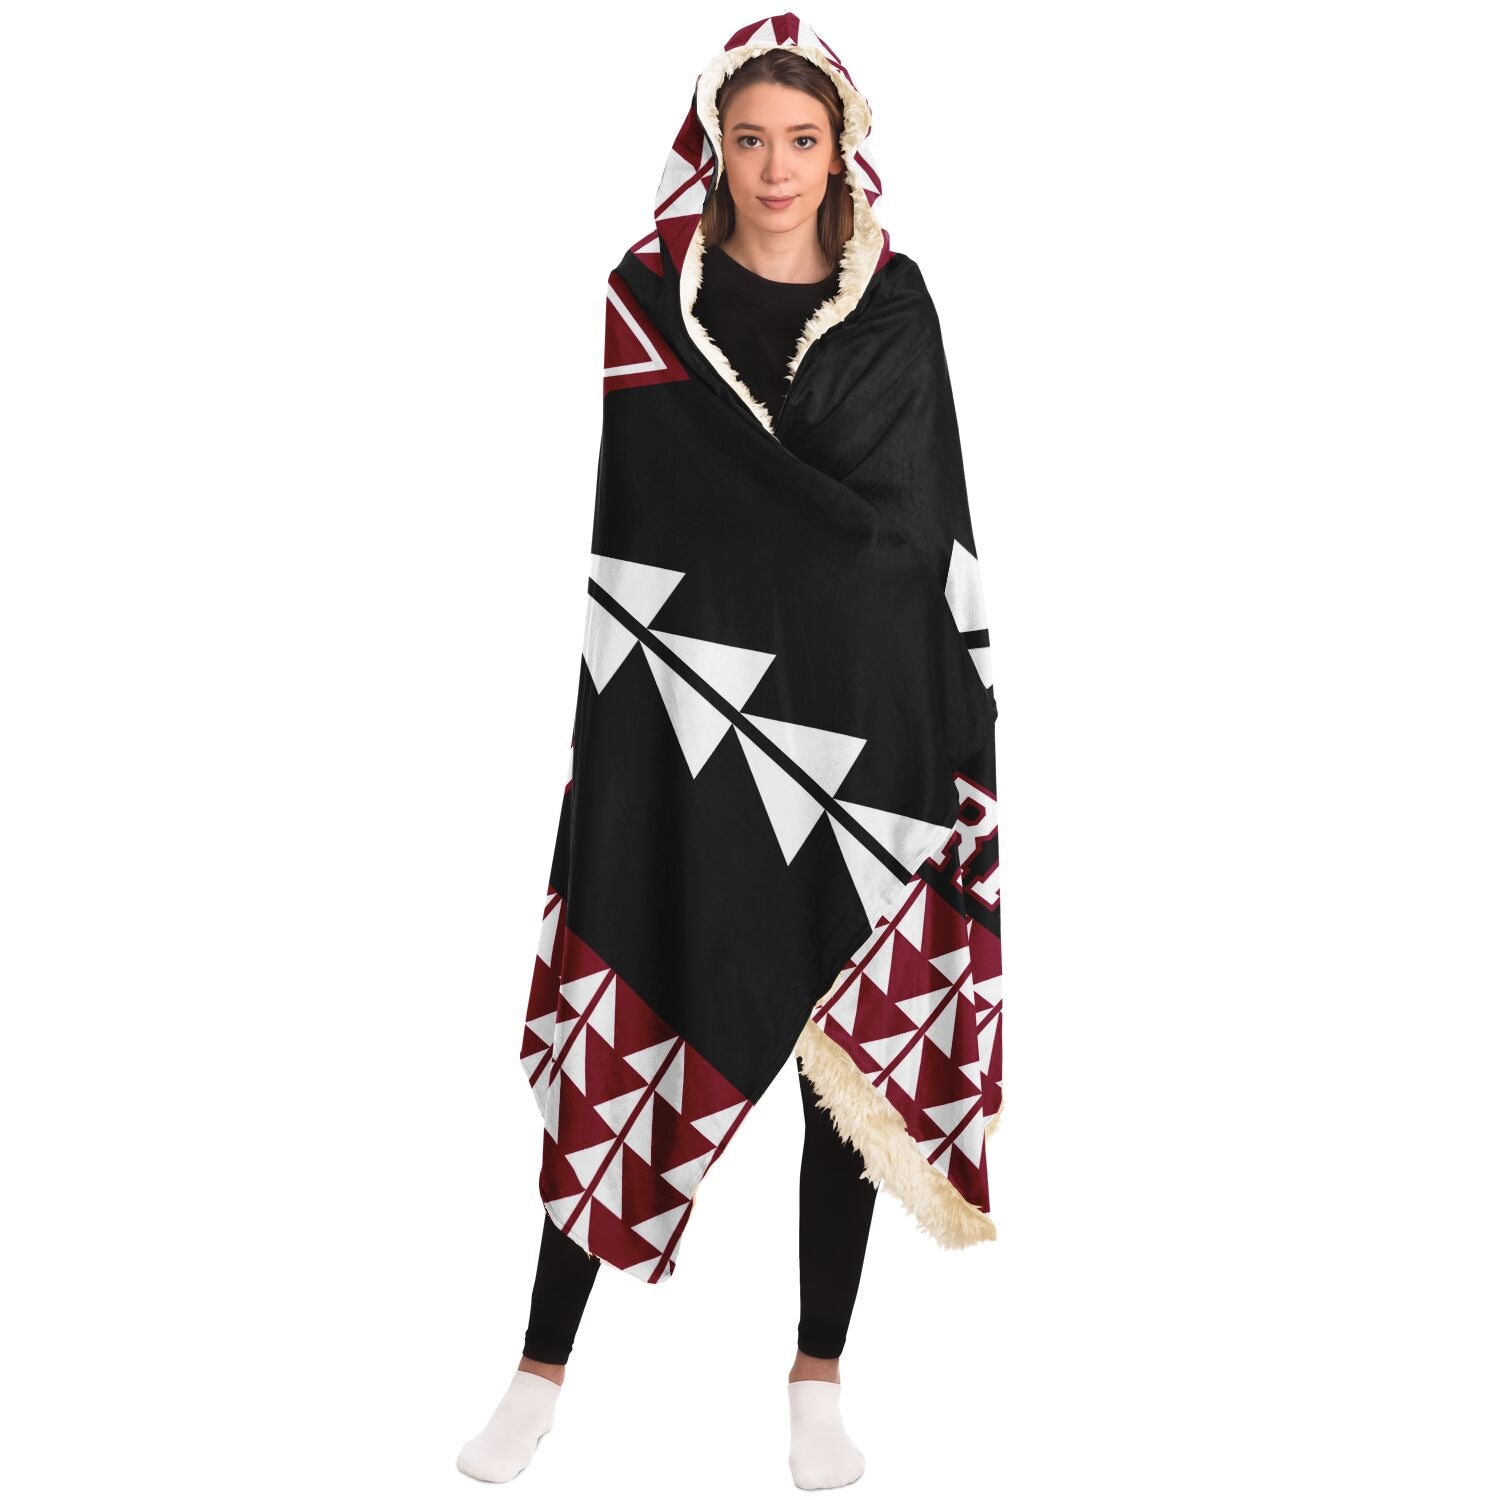 Rinesmith Hooded Hoopa Blanket